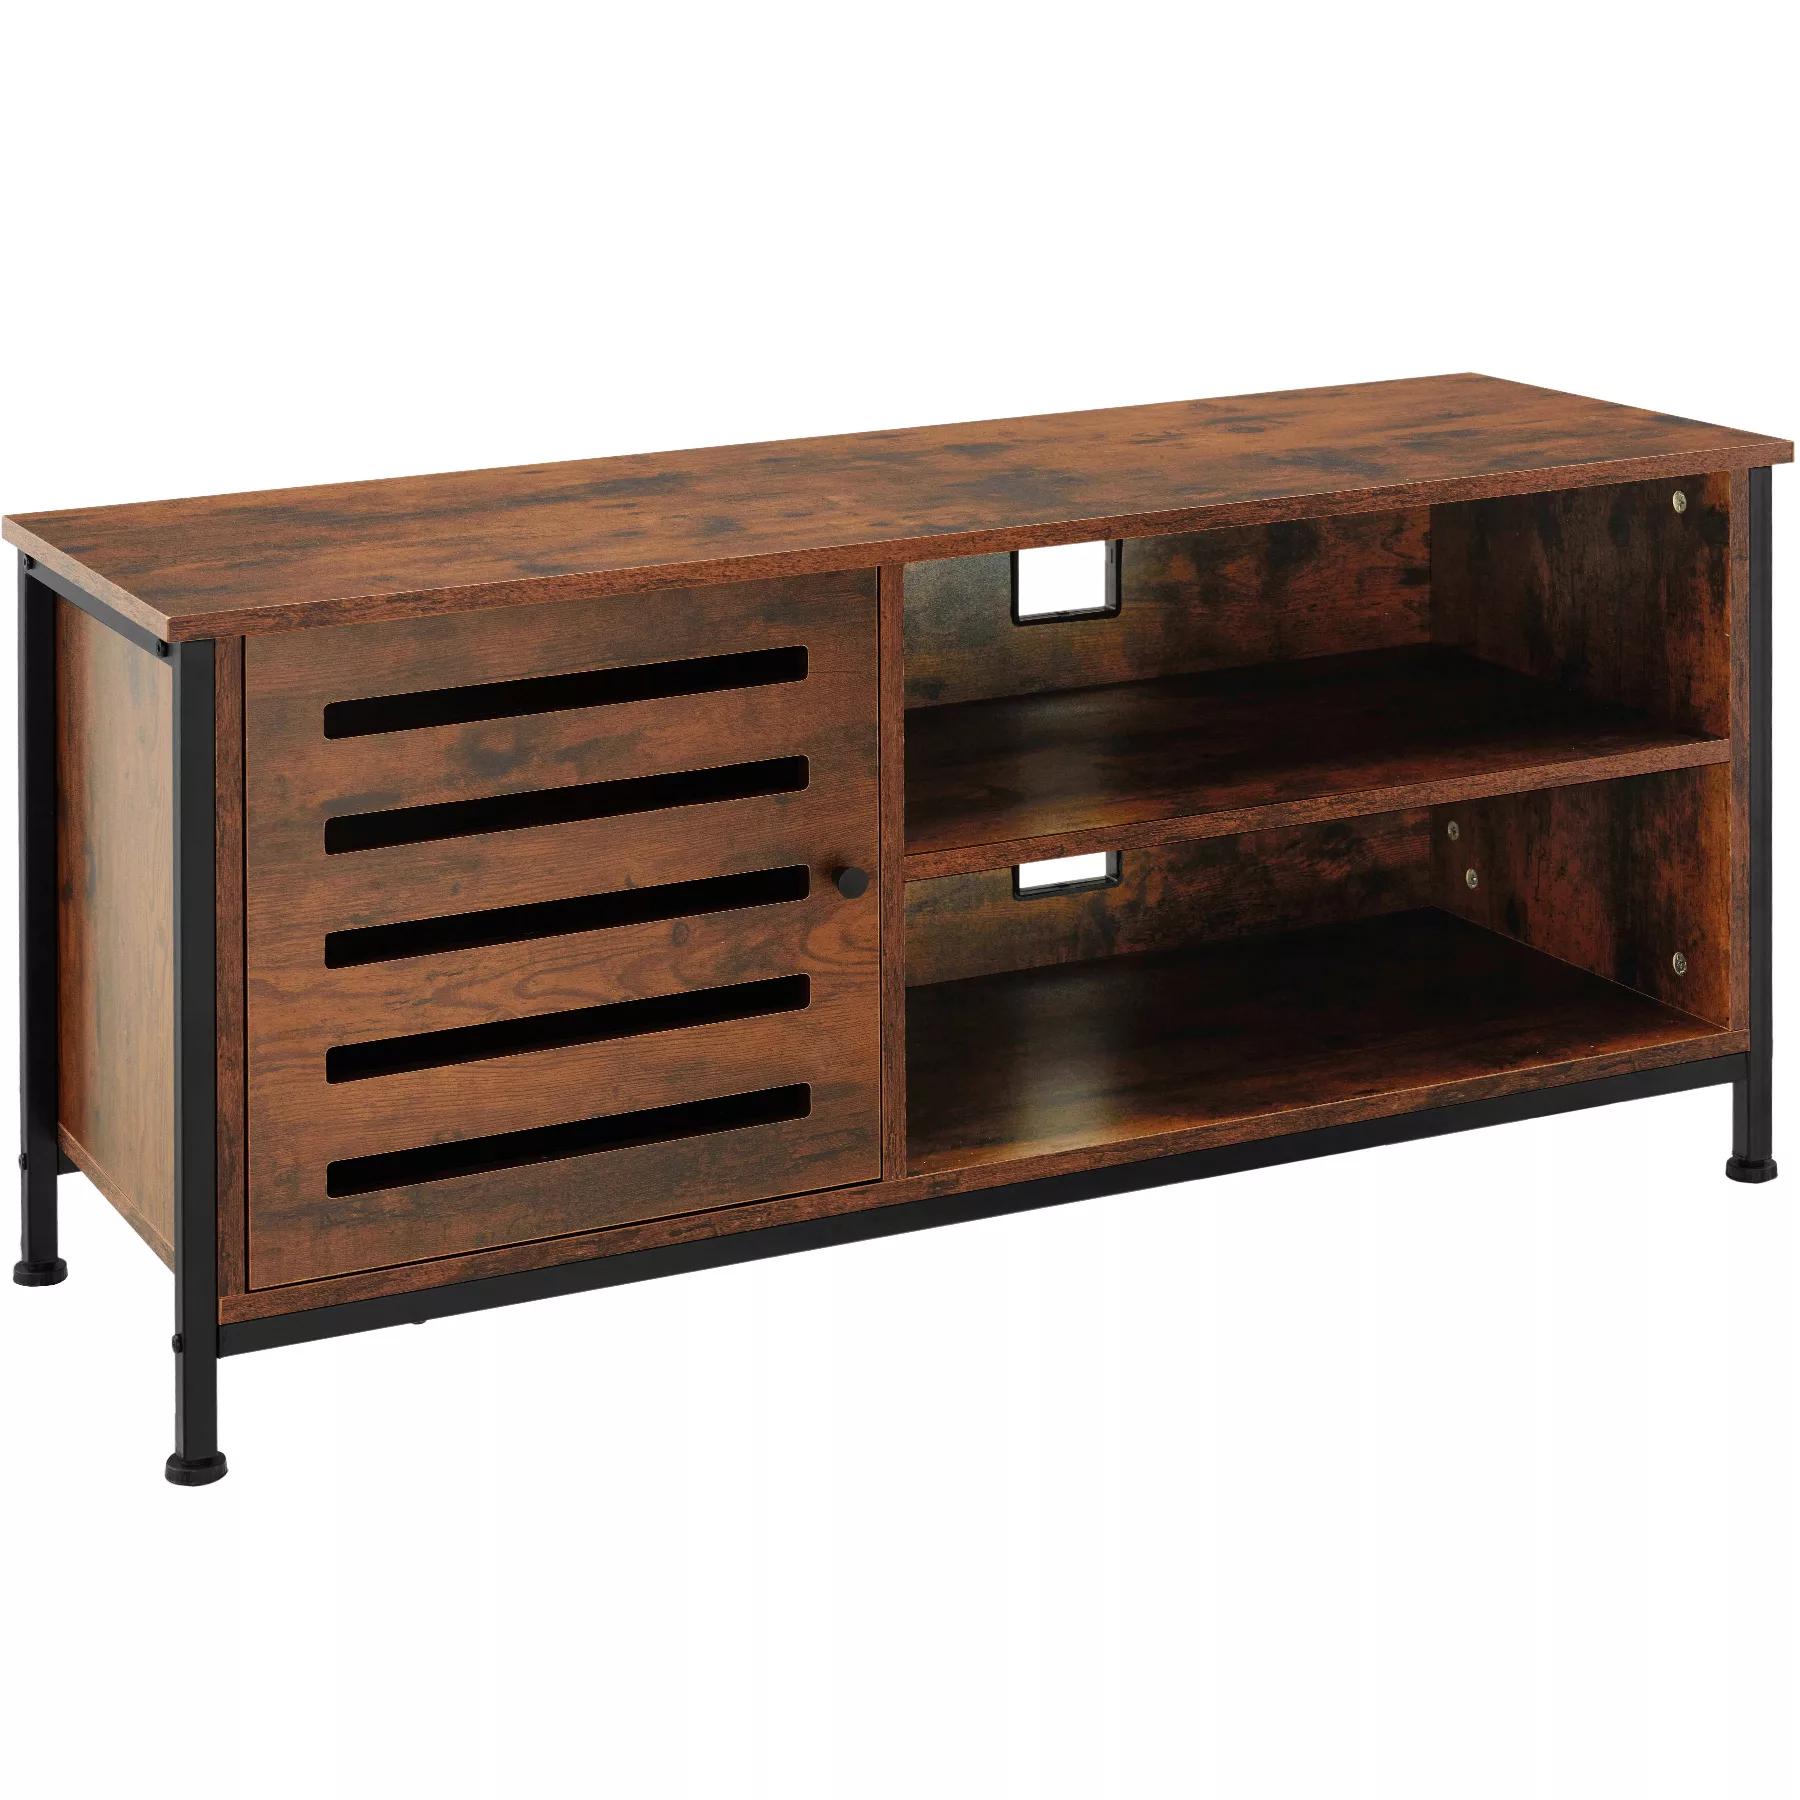 TV-Board Galway 110x41,5x50,5cm - Industrial Holz dunkel, rustikal günstig online kaufen